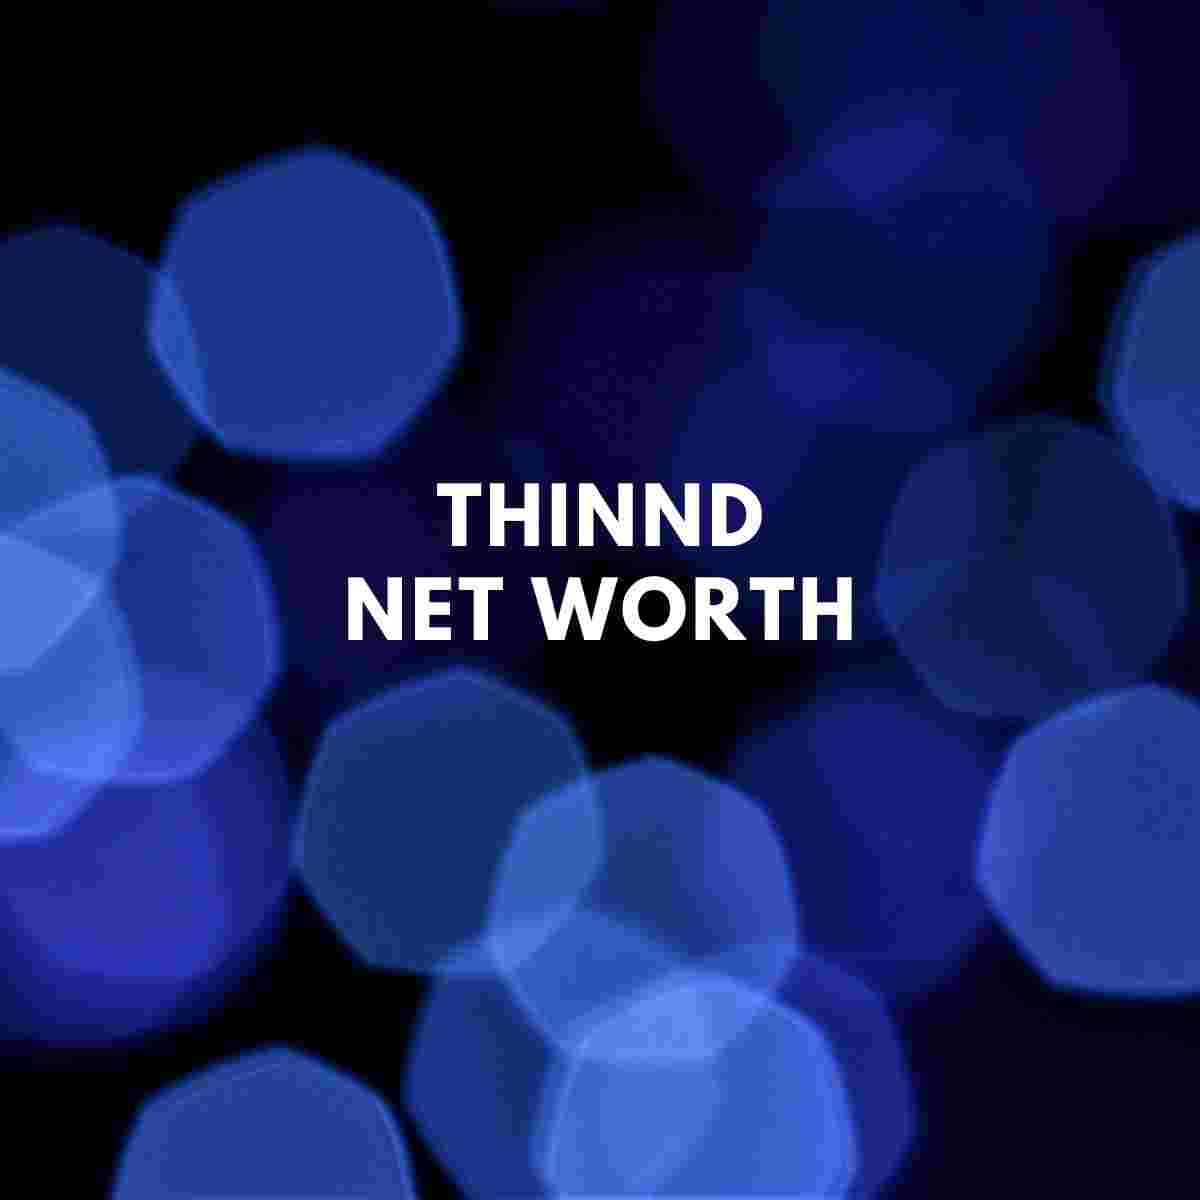 Thinnd net worth